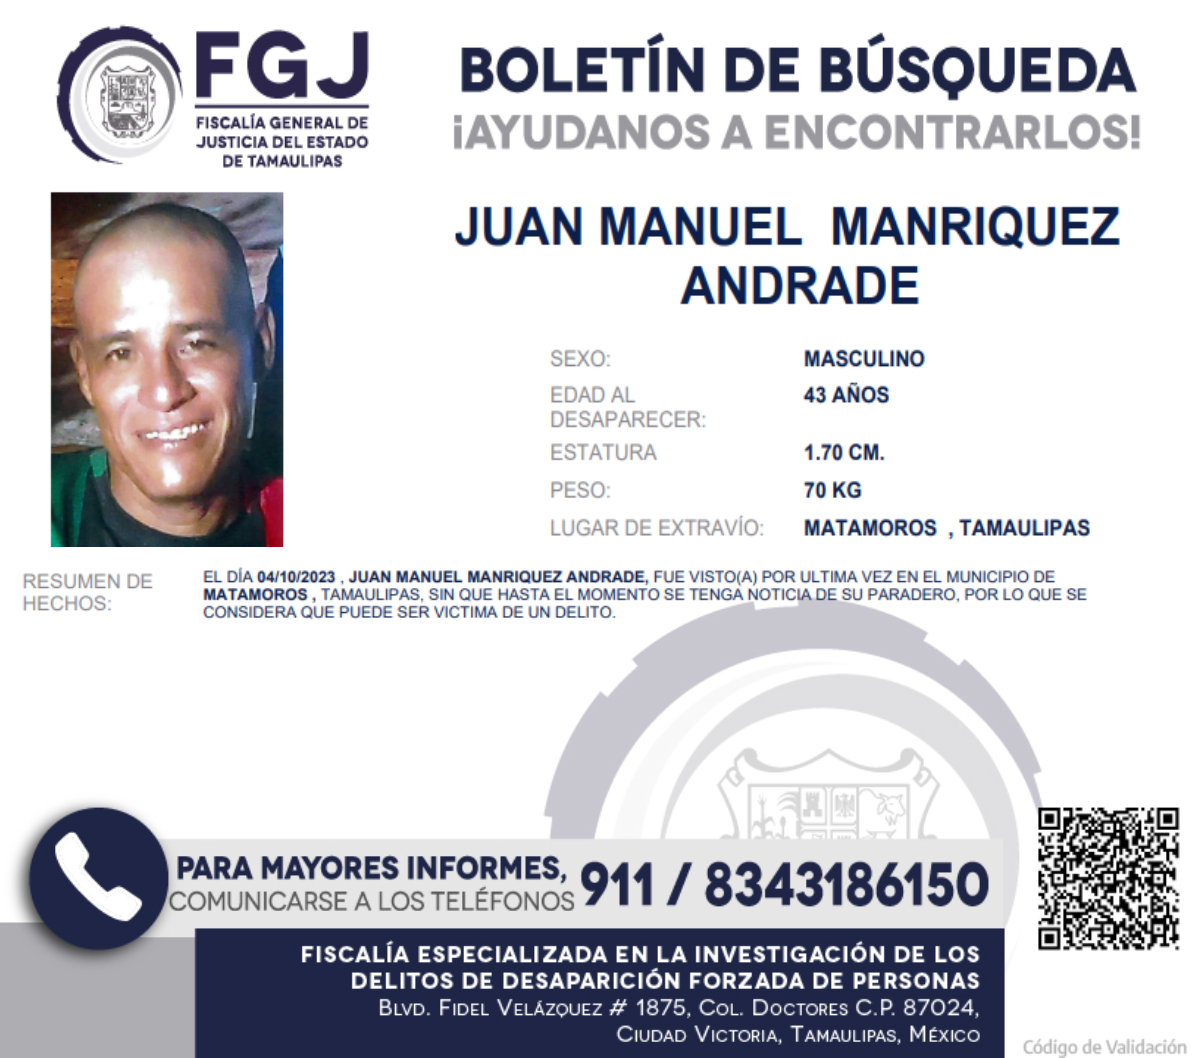 Boletín de búsqueda Juan Manuel Manríquez Andrade